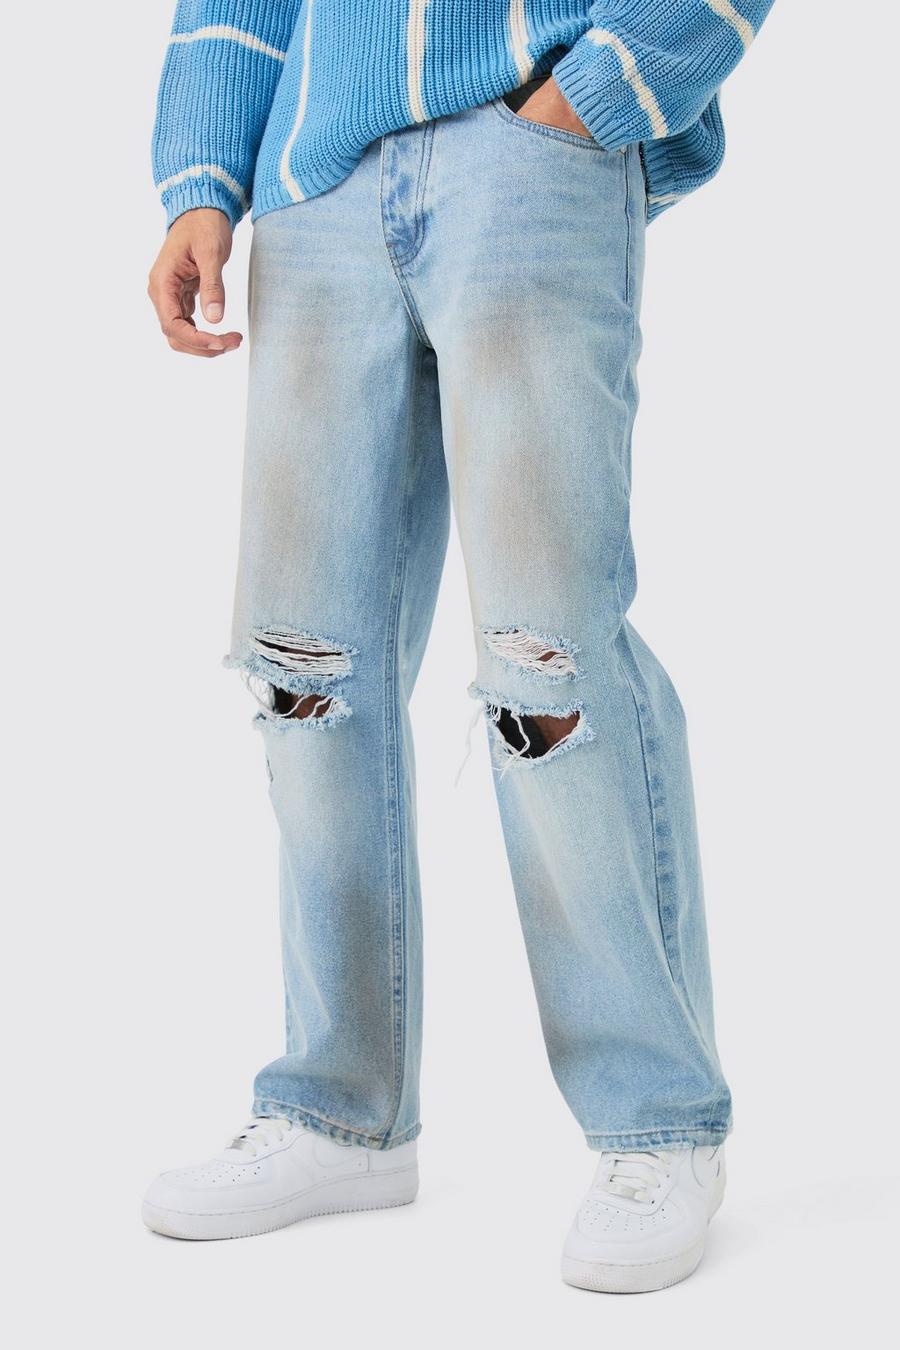 Lockere hellblaue Jeans mit Riss am Knie, Light blue